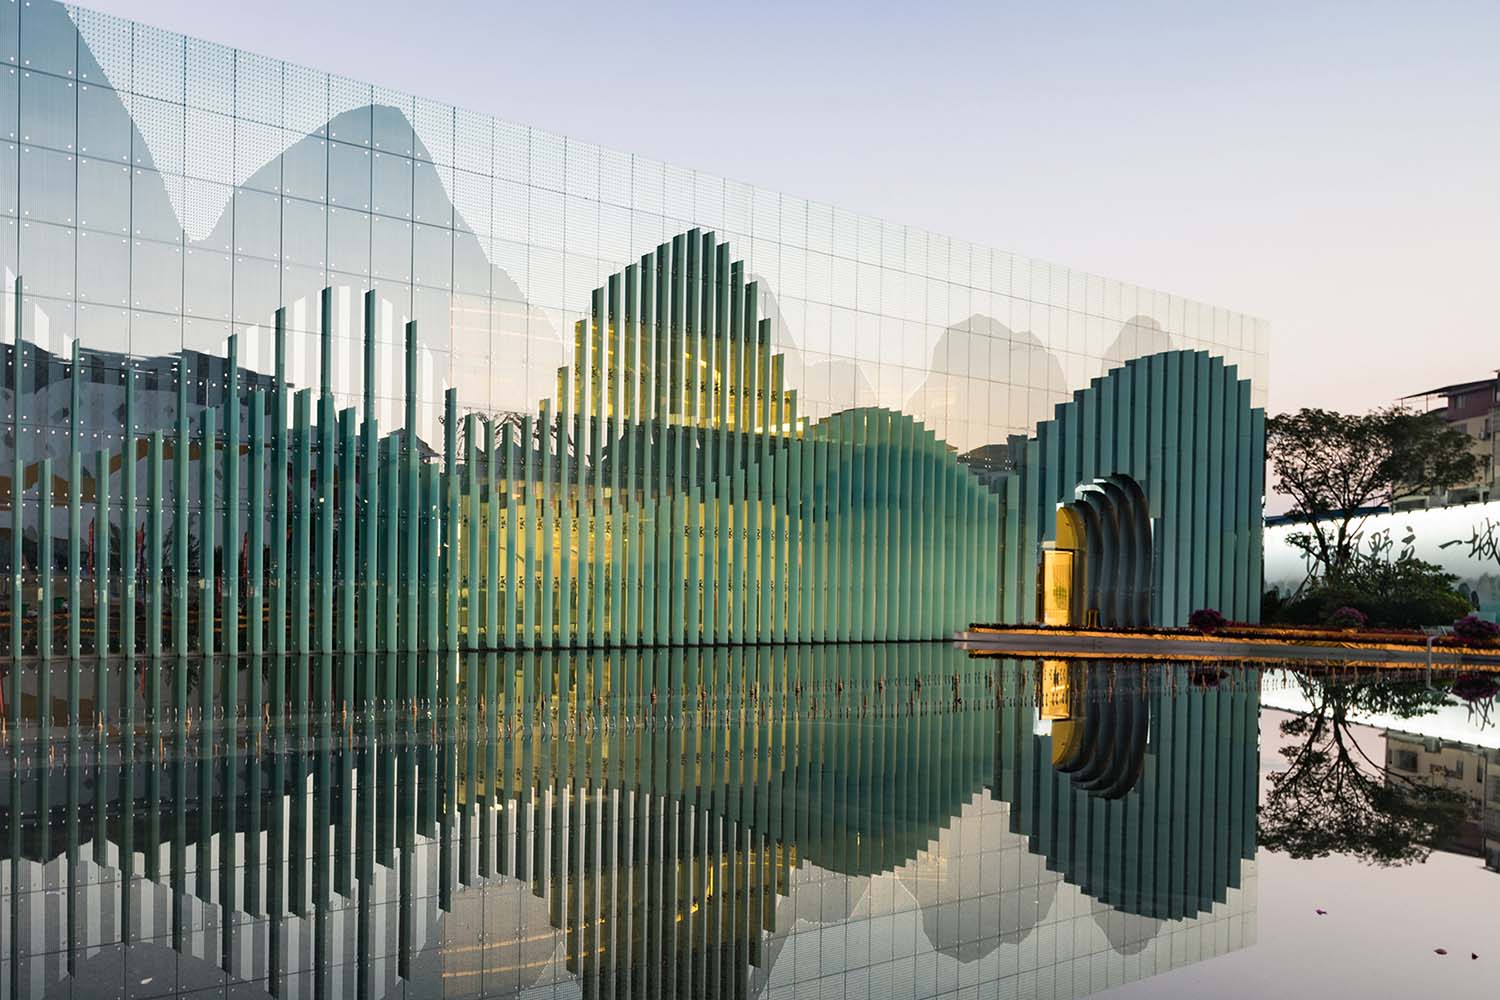 Pusat Pameran Guilin oleh Tengyuan Design